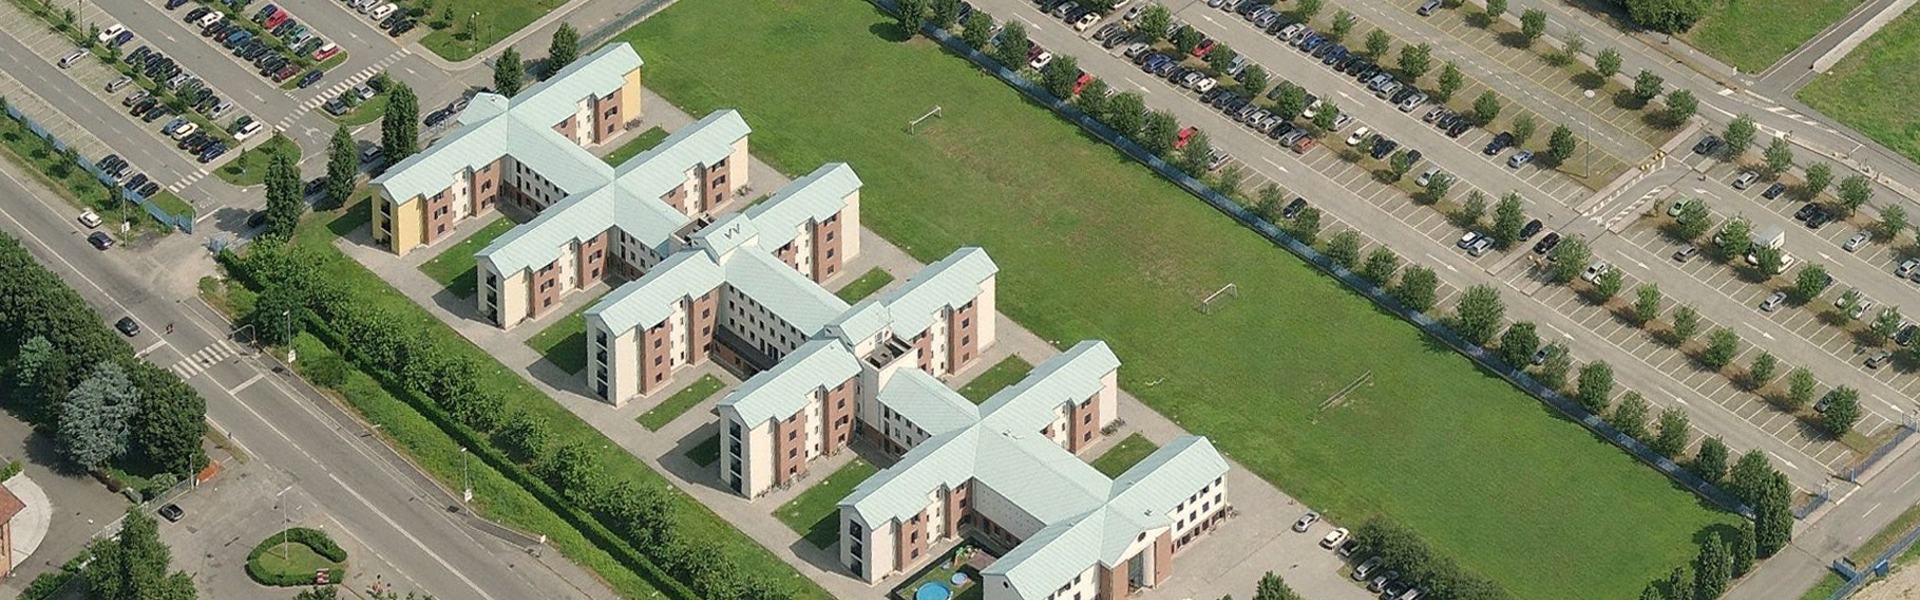 Alessandro Volta University